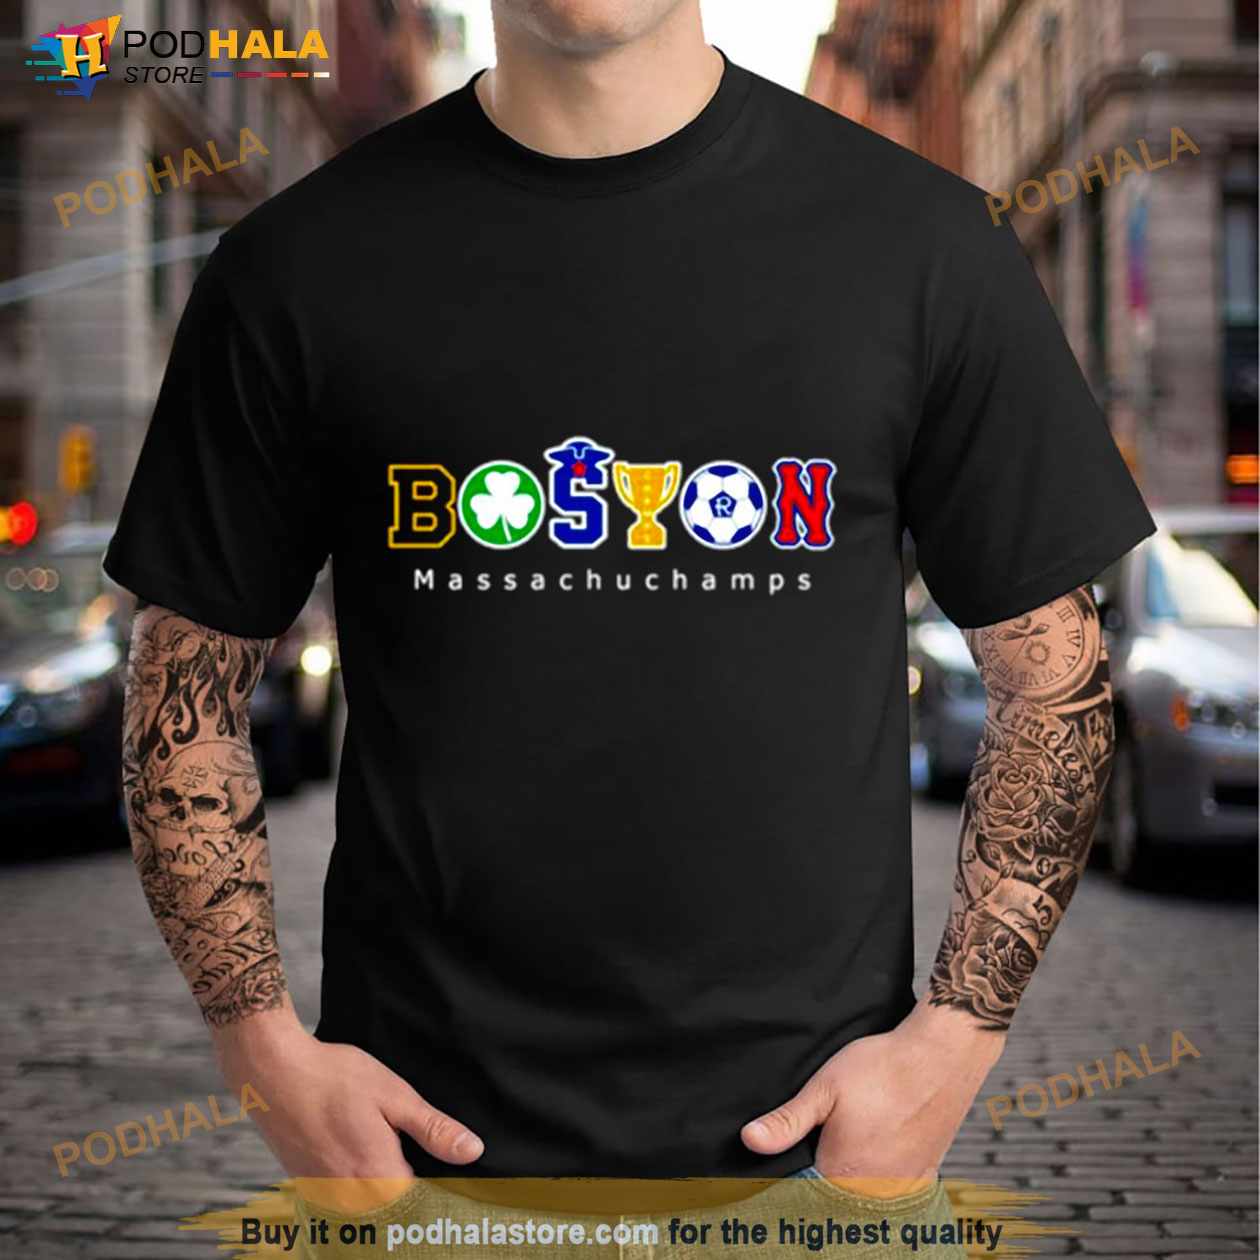 Boston Massachusetts T-shirt